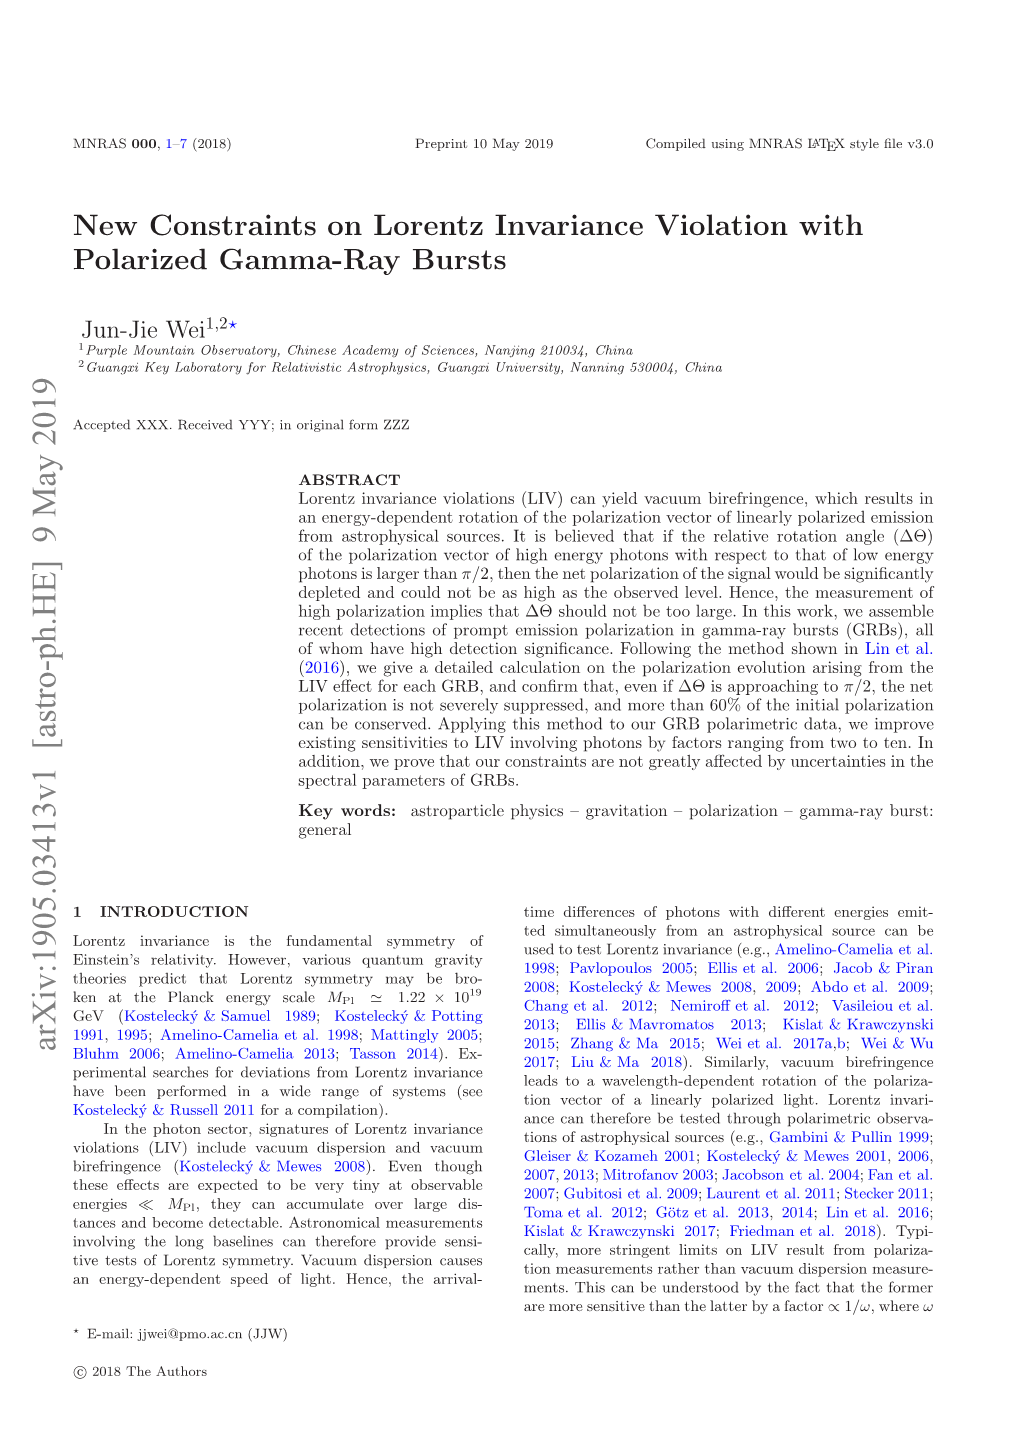 New Constraints on Lorentz Invariance Violation with Polarized Gamma-Ray